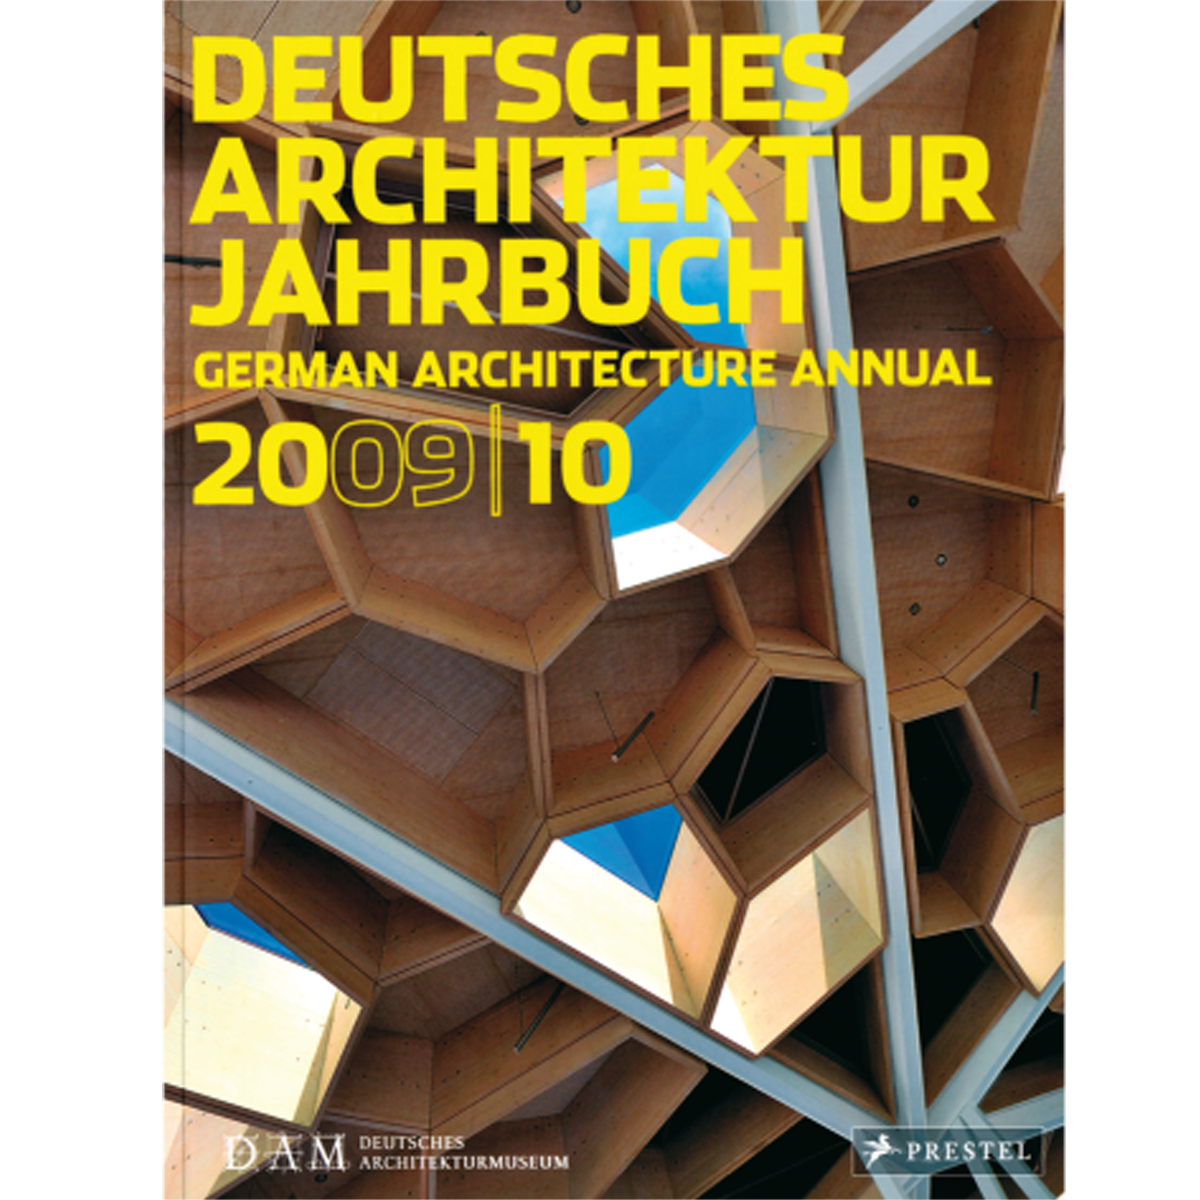 German Architecture Annual 2009/10